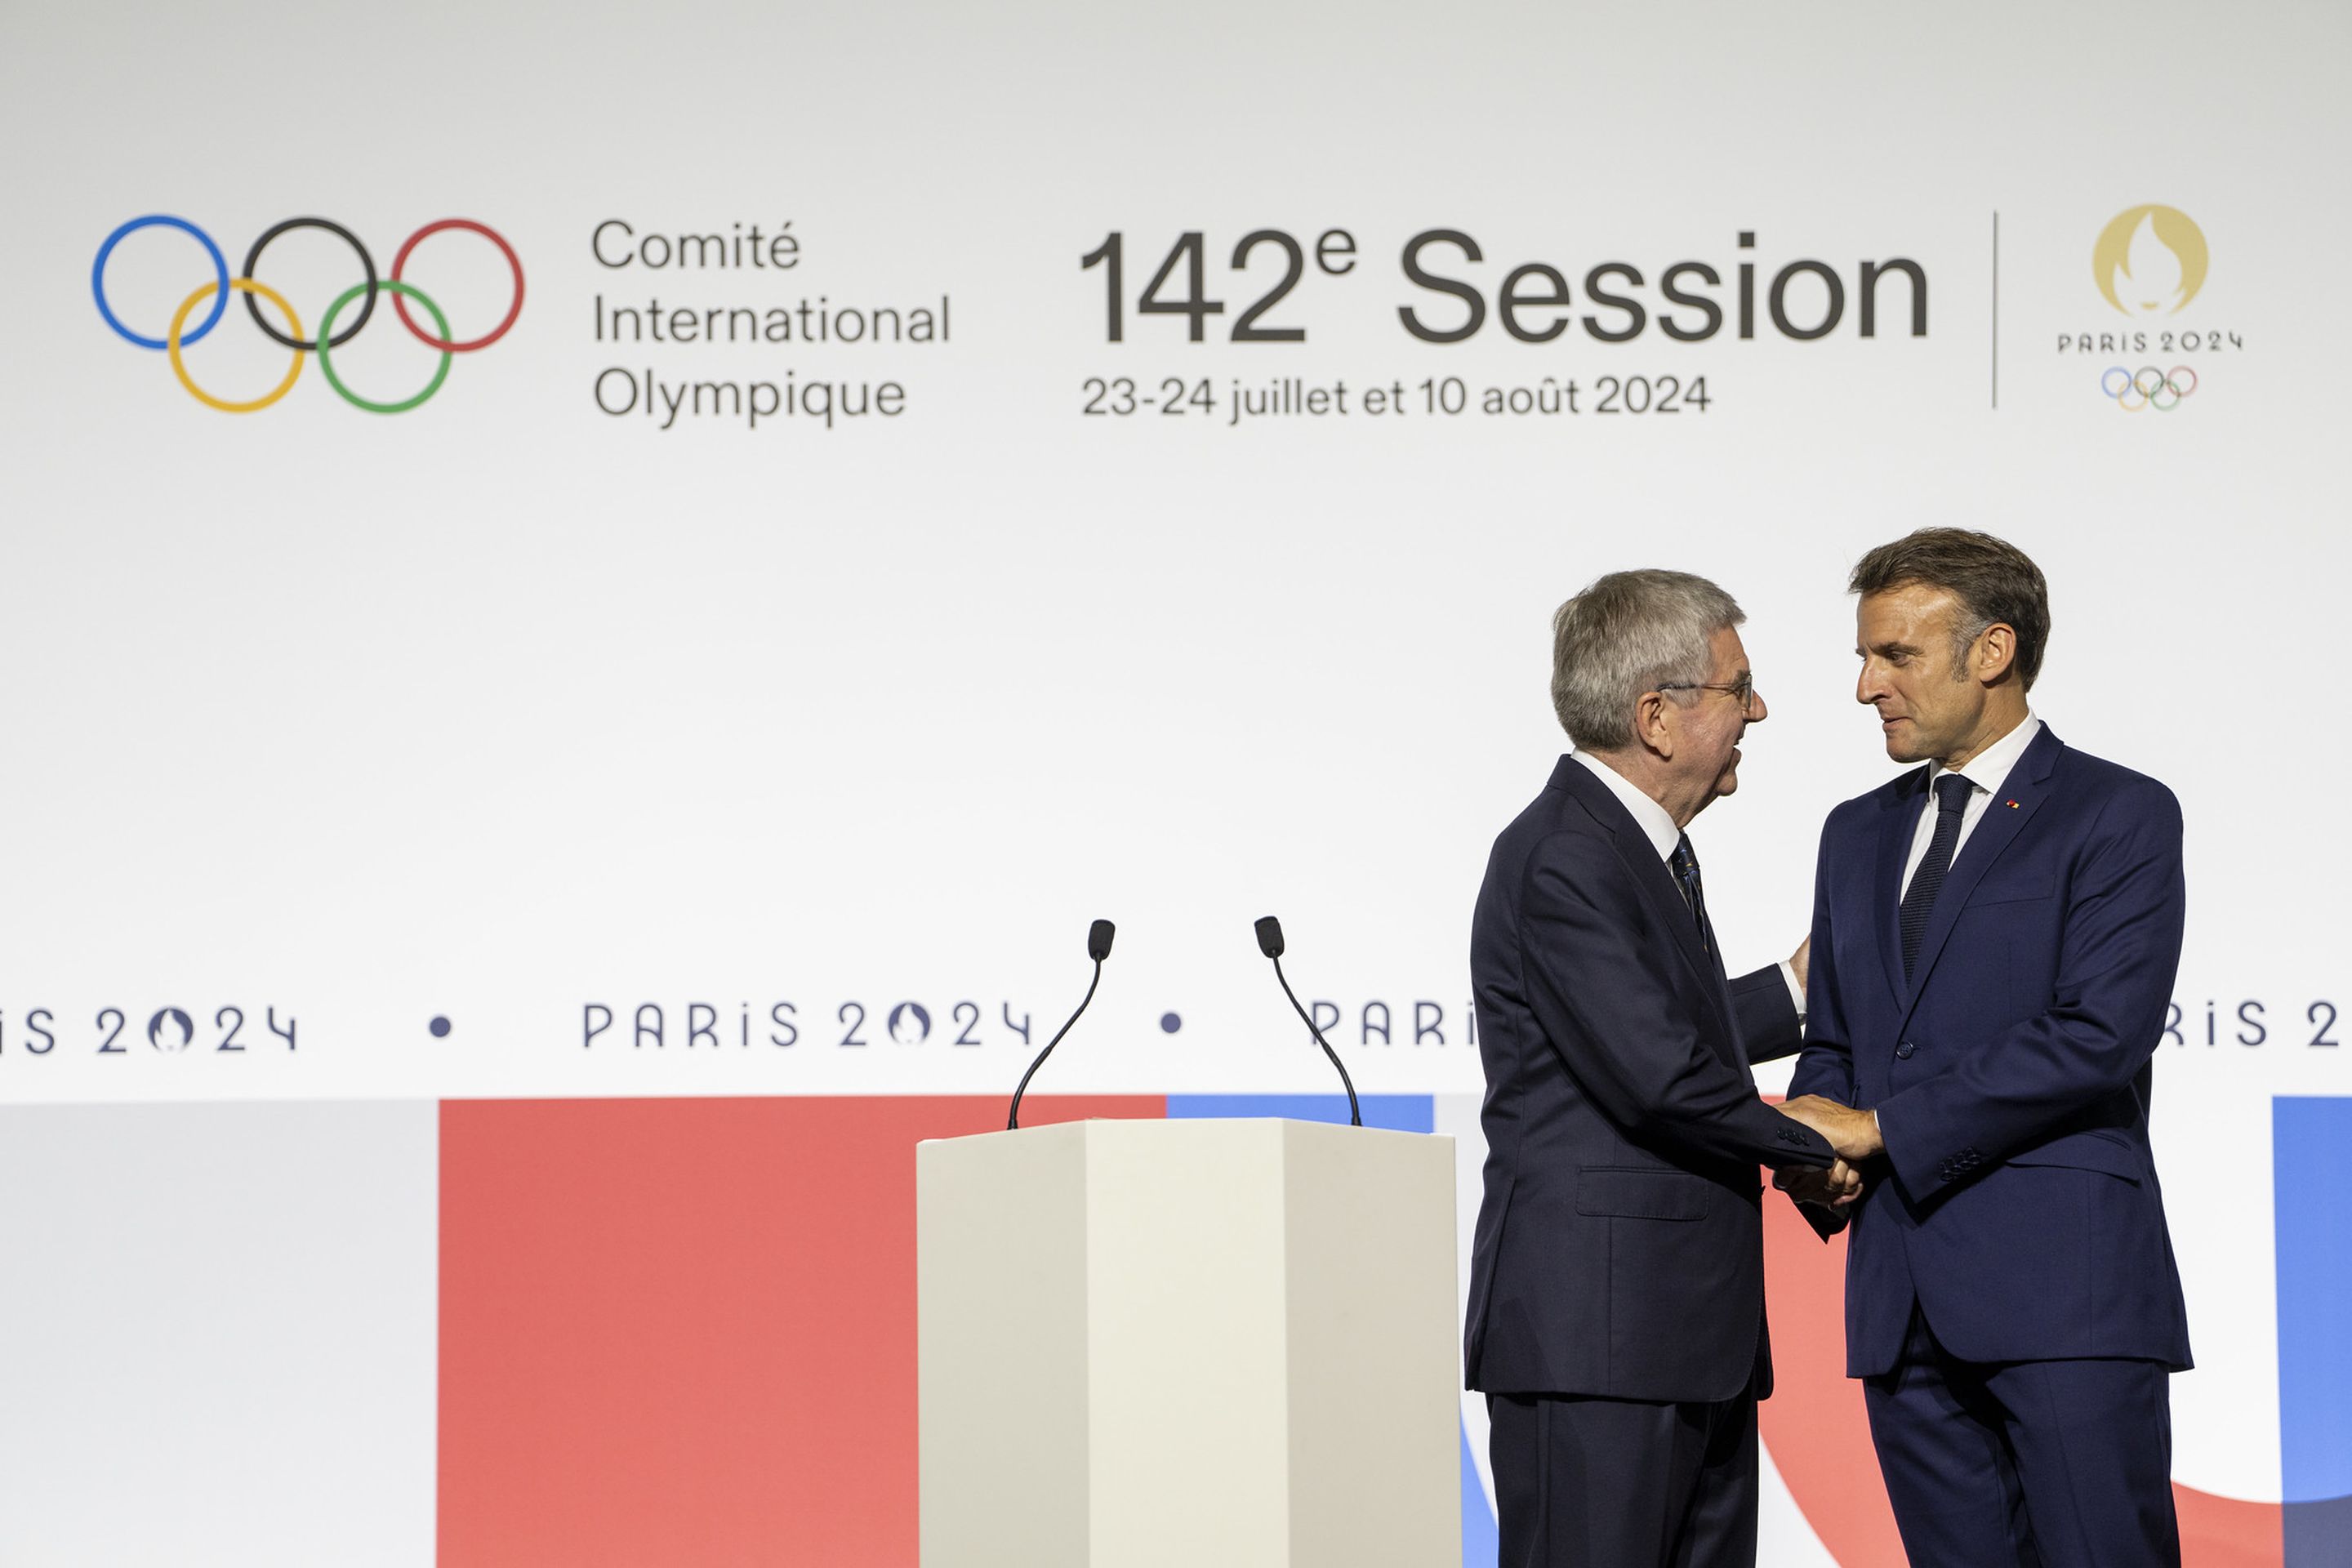 Thomas Bach, IOC President, and Emmanuel Macron, President of France, shaking hands